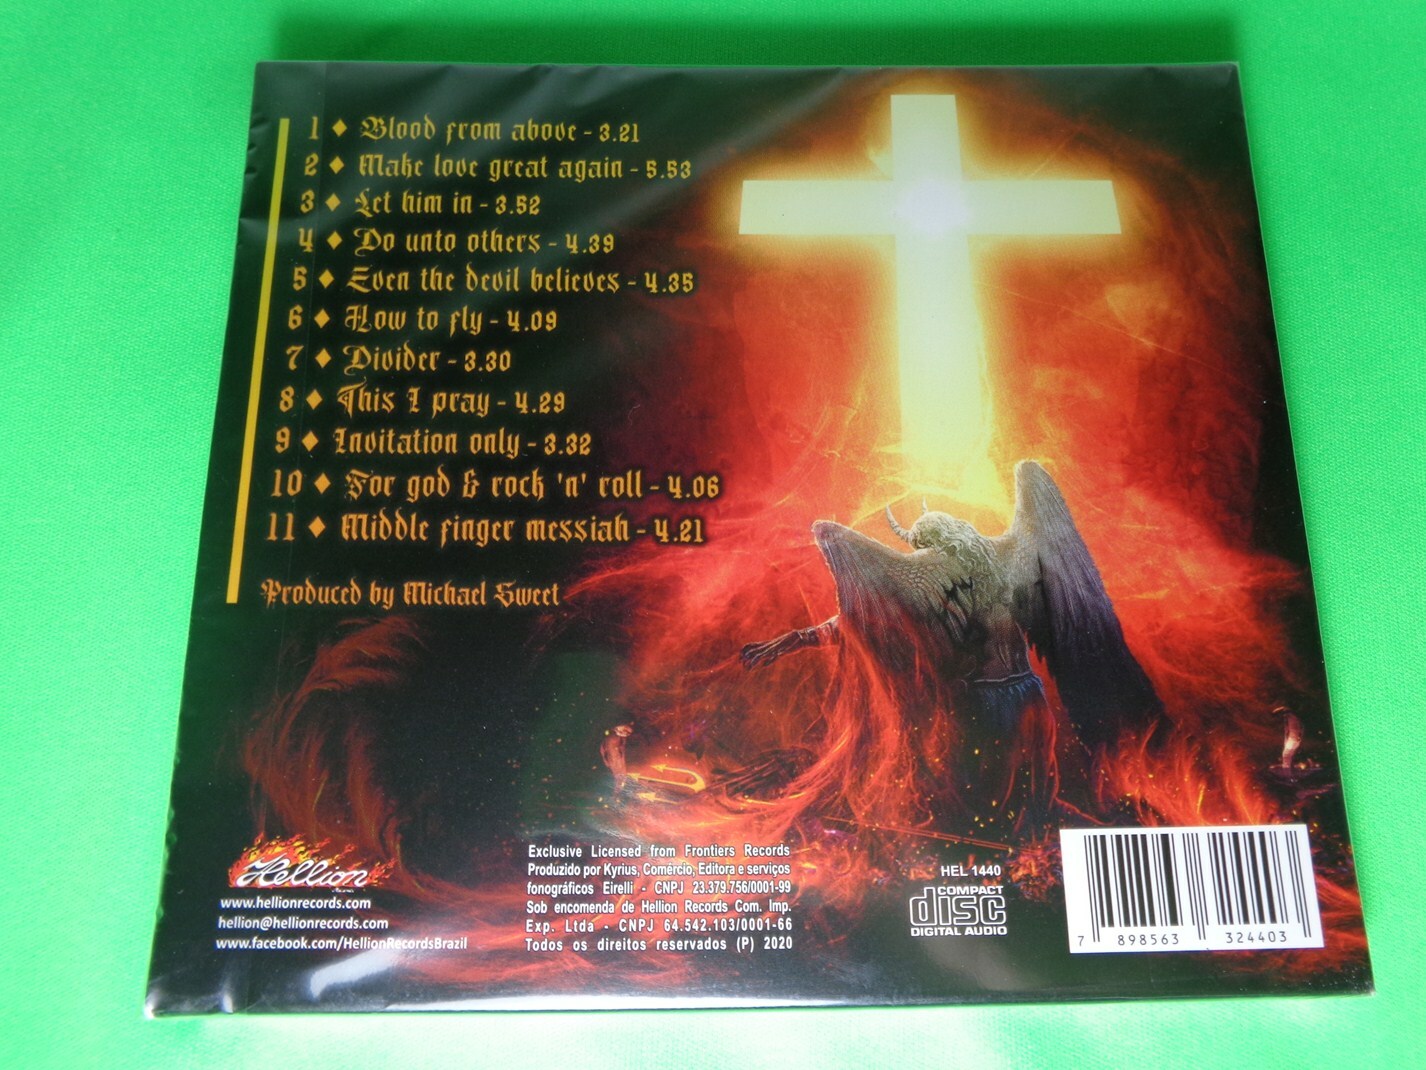 CD - Stryper - Even the Devil Believes (Lacrado)